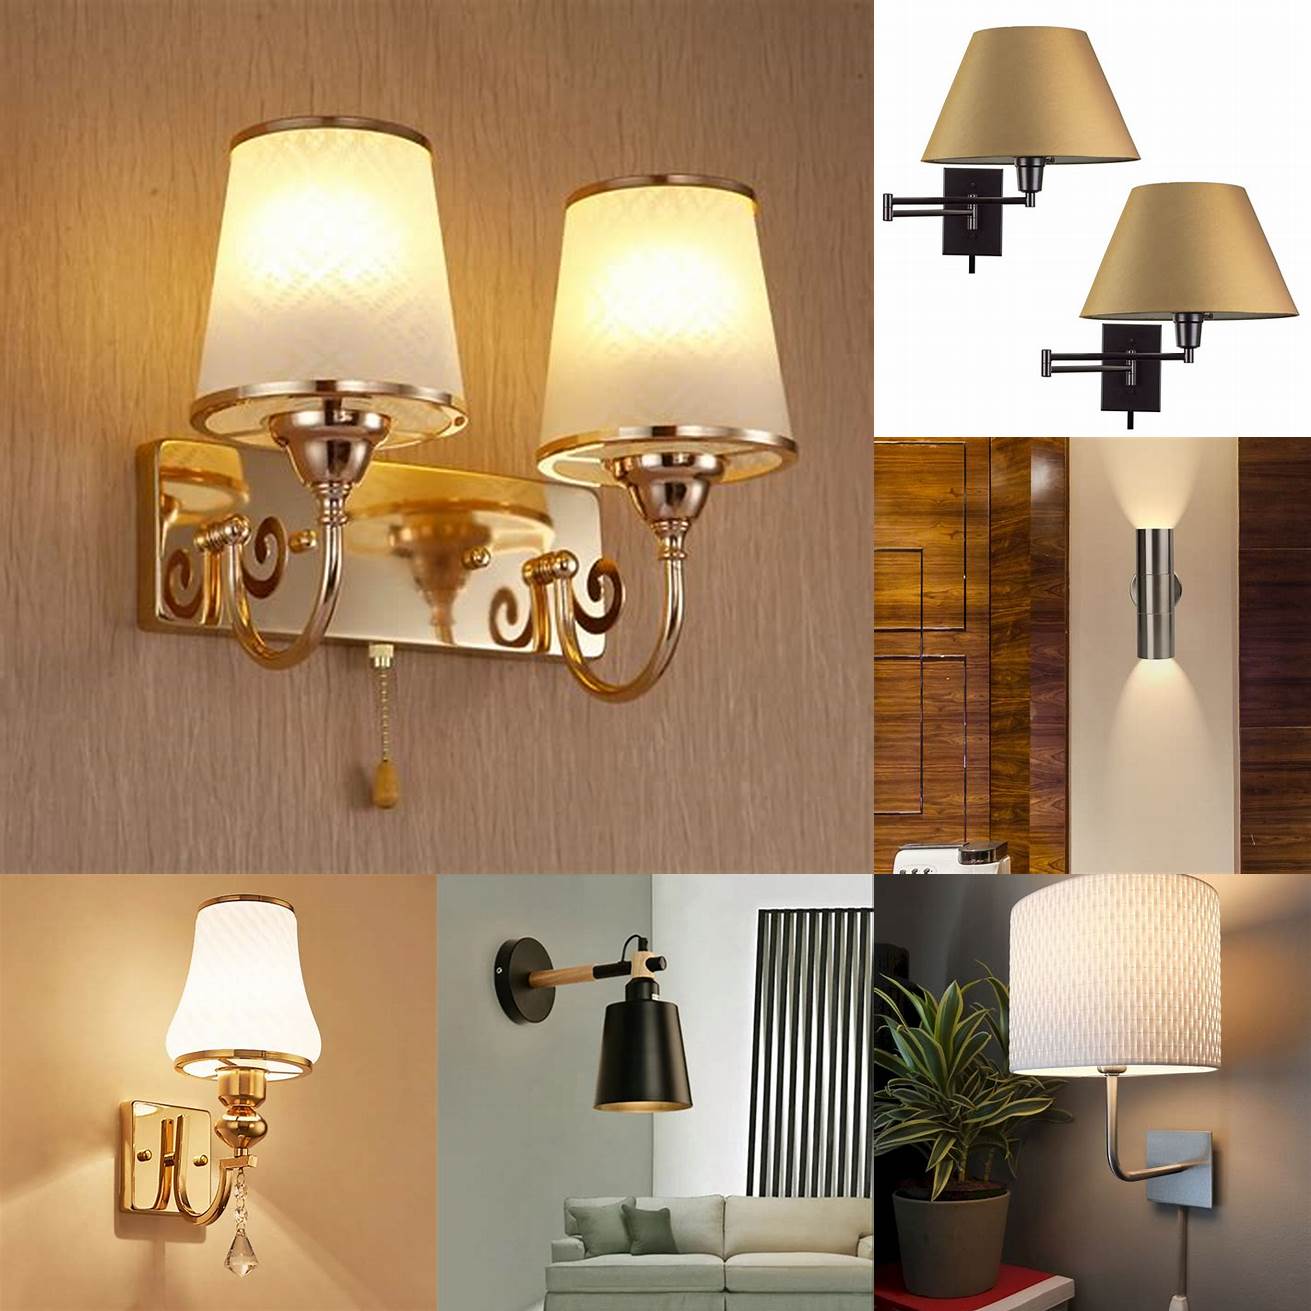 Wall-mounted lamps